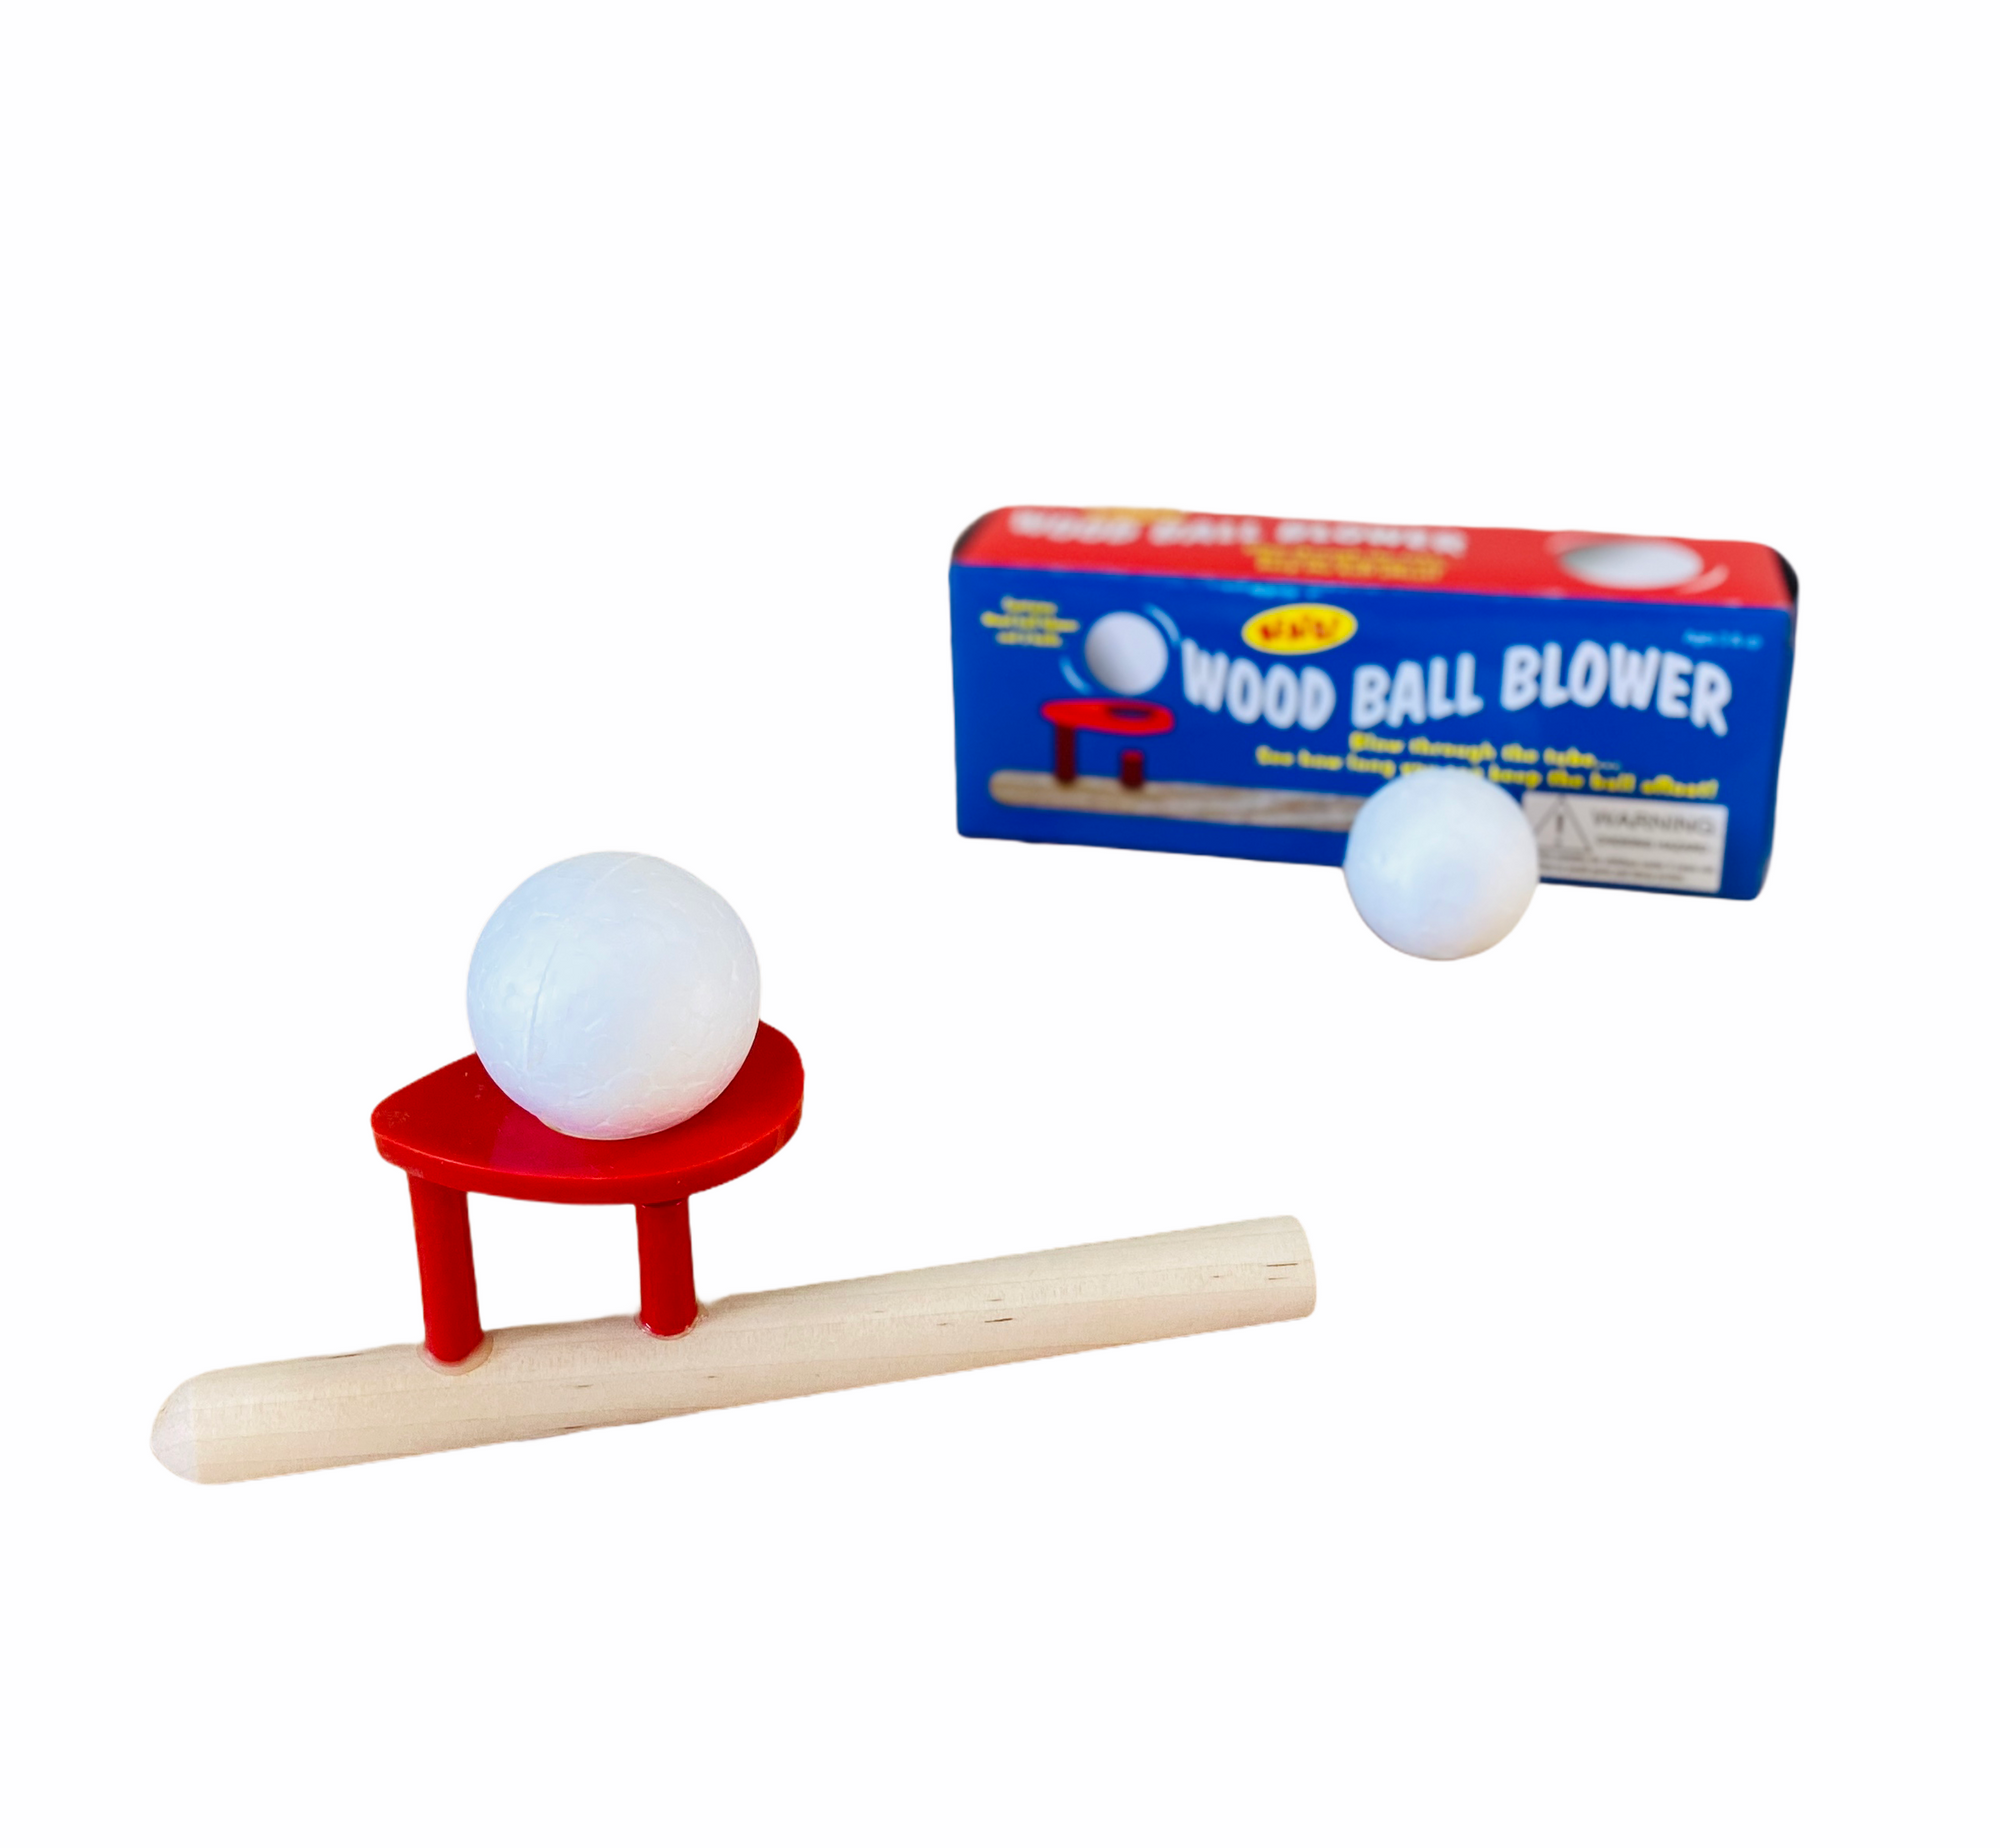 Wood Ball Blower